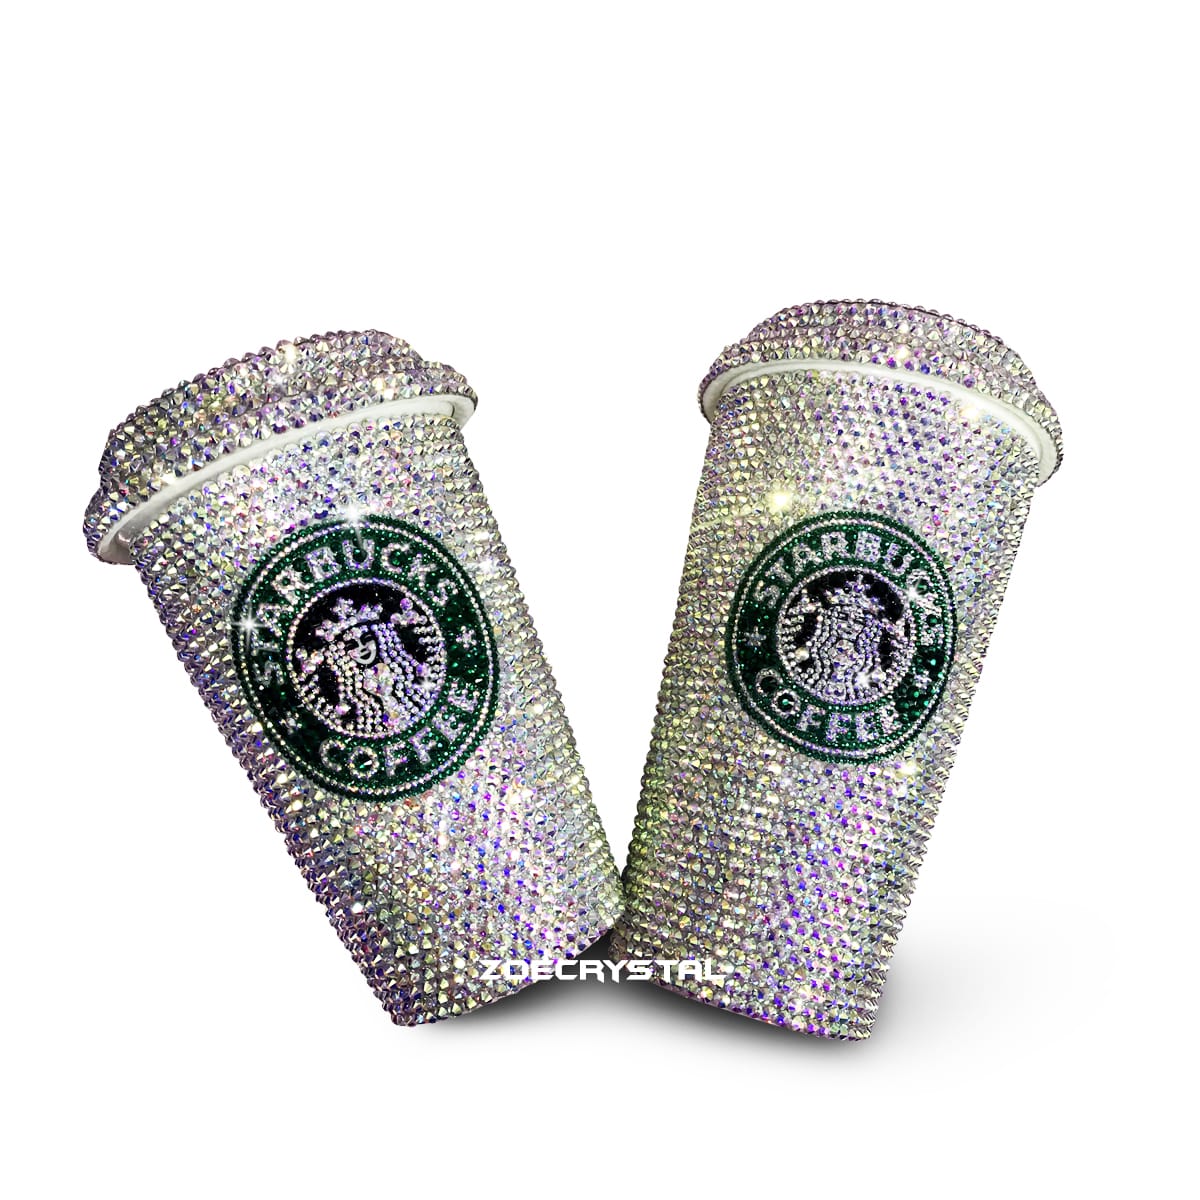 Starbucks Cup Light Blue Diamond Cut Crystals | Bedazzled Starbucks Tumbler